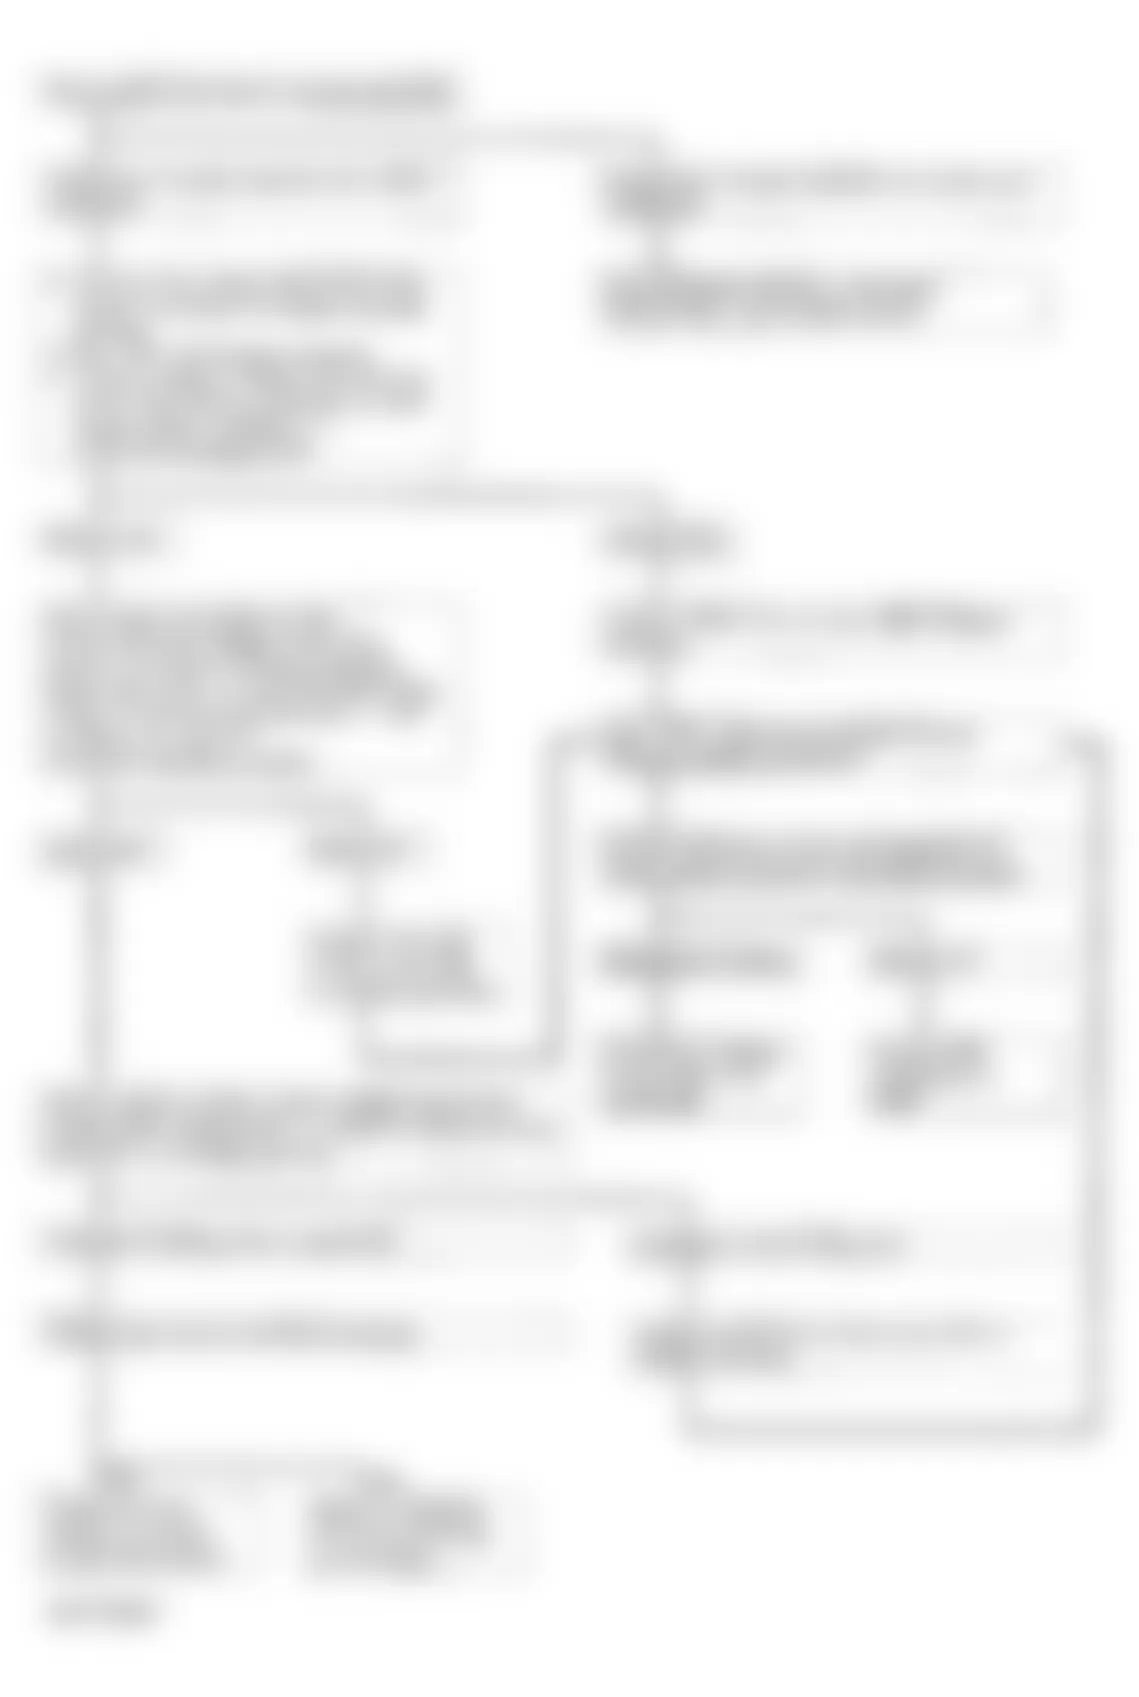 Isuzu Pickup S 1993 - Component Locations -  Code 61, 62 - Diagnostic Flowchart (2 Of 2) Courtesy Isuzu Motor Co